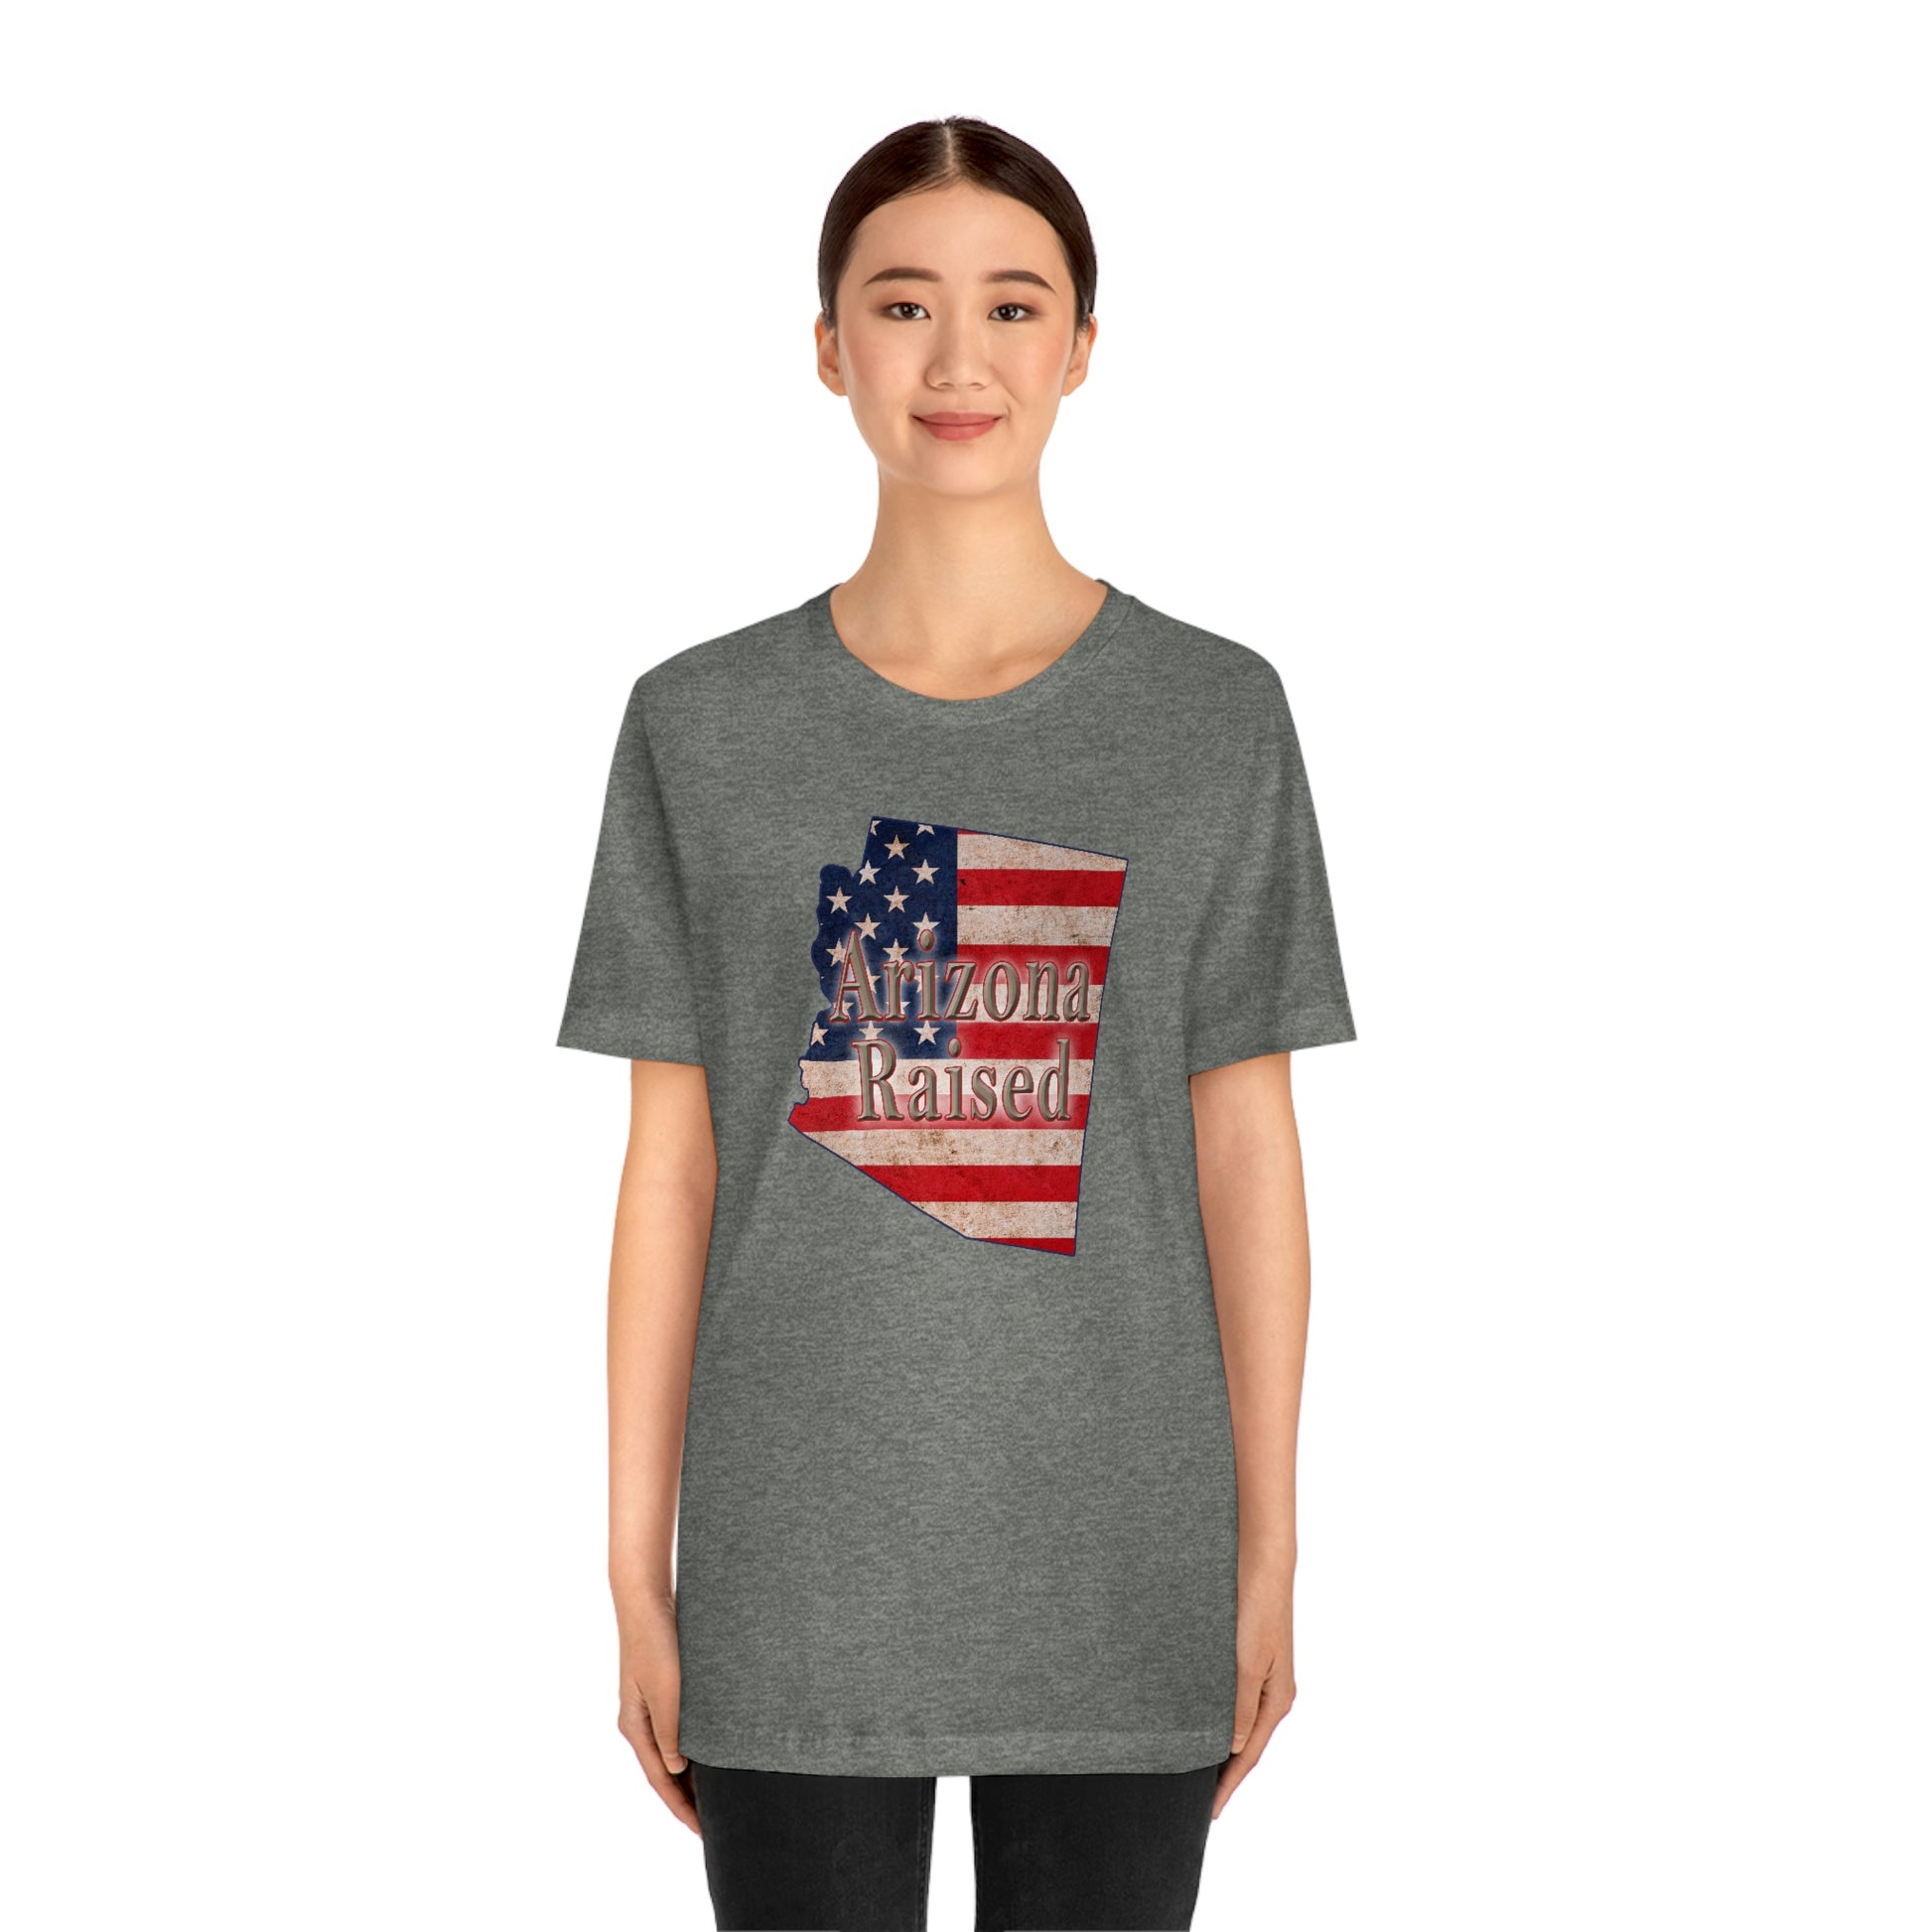 Arizona Raised Flag Unisex Jersey Short Sleeve Tee Tshirt T-shirt